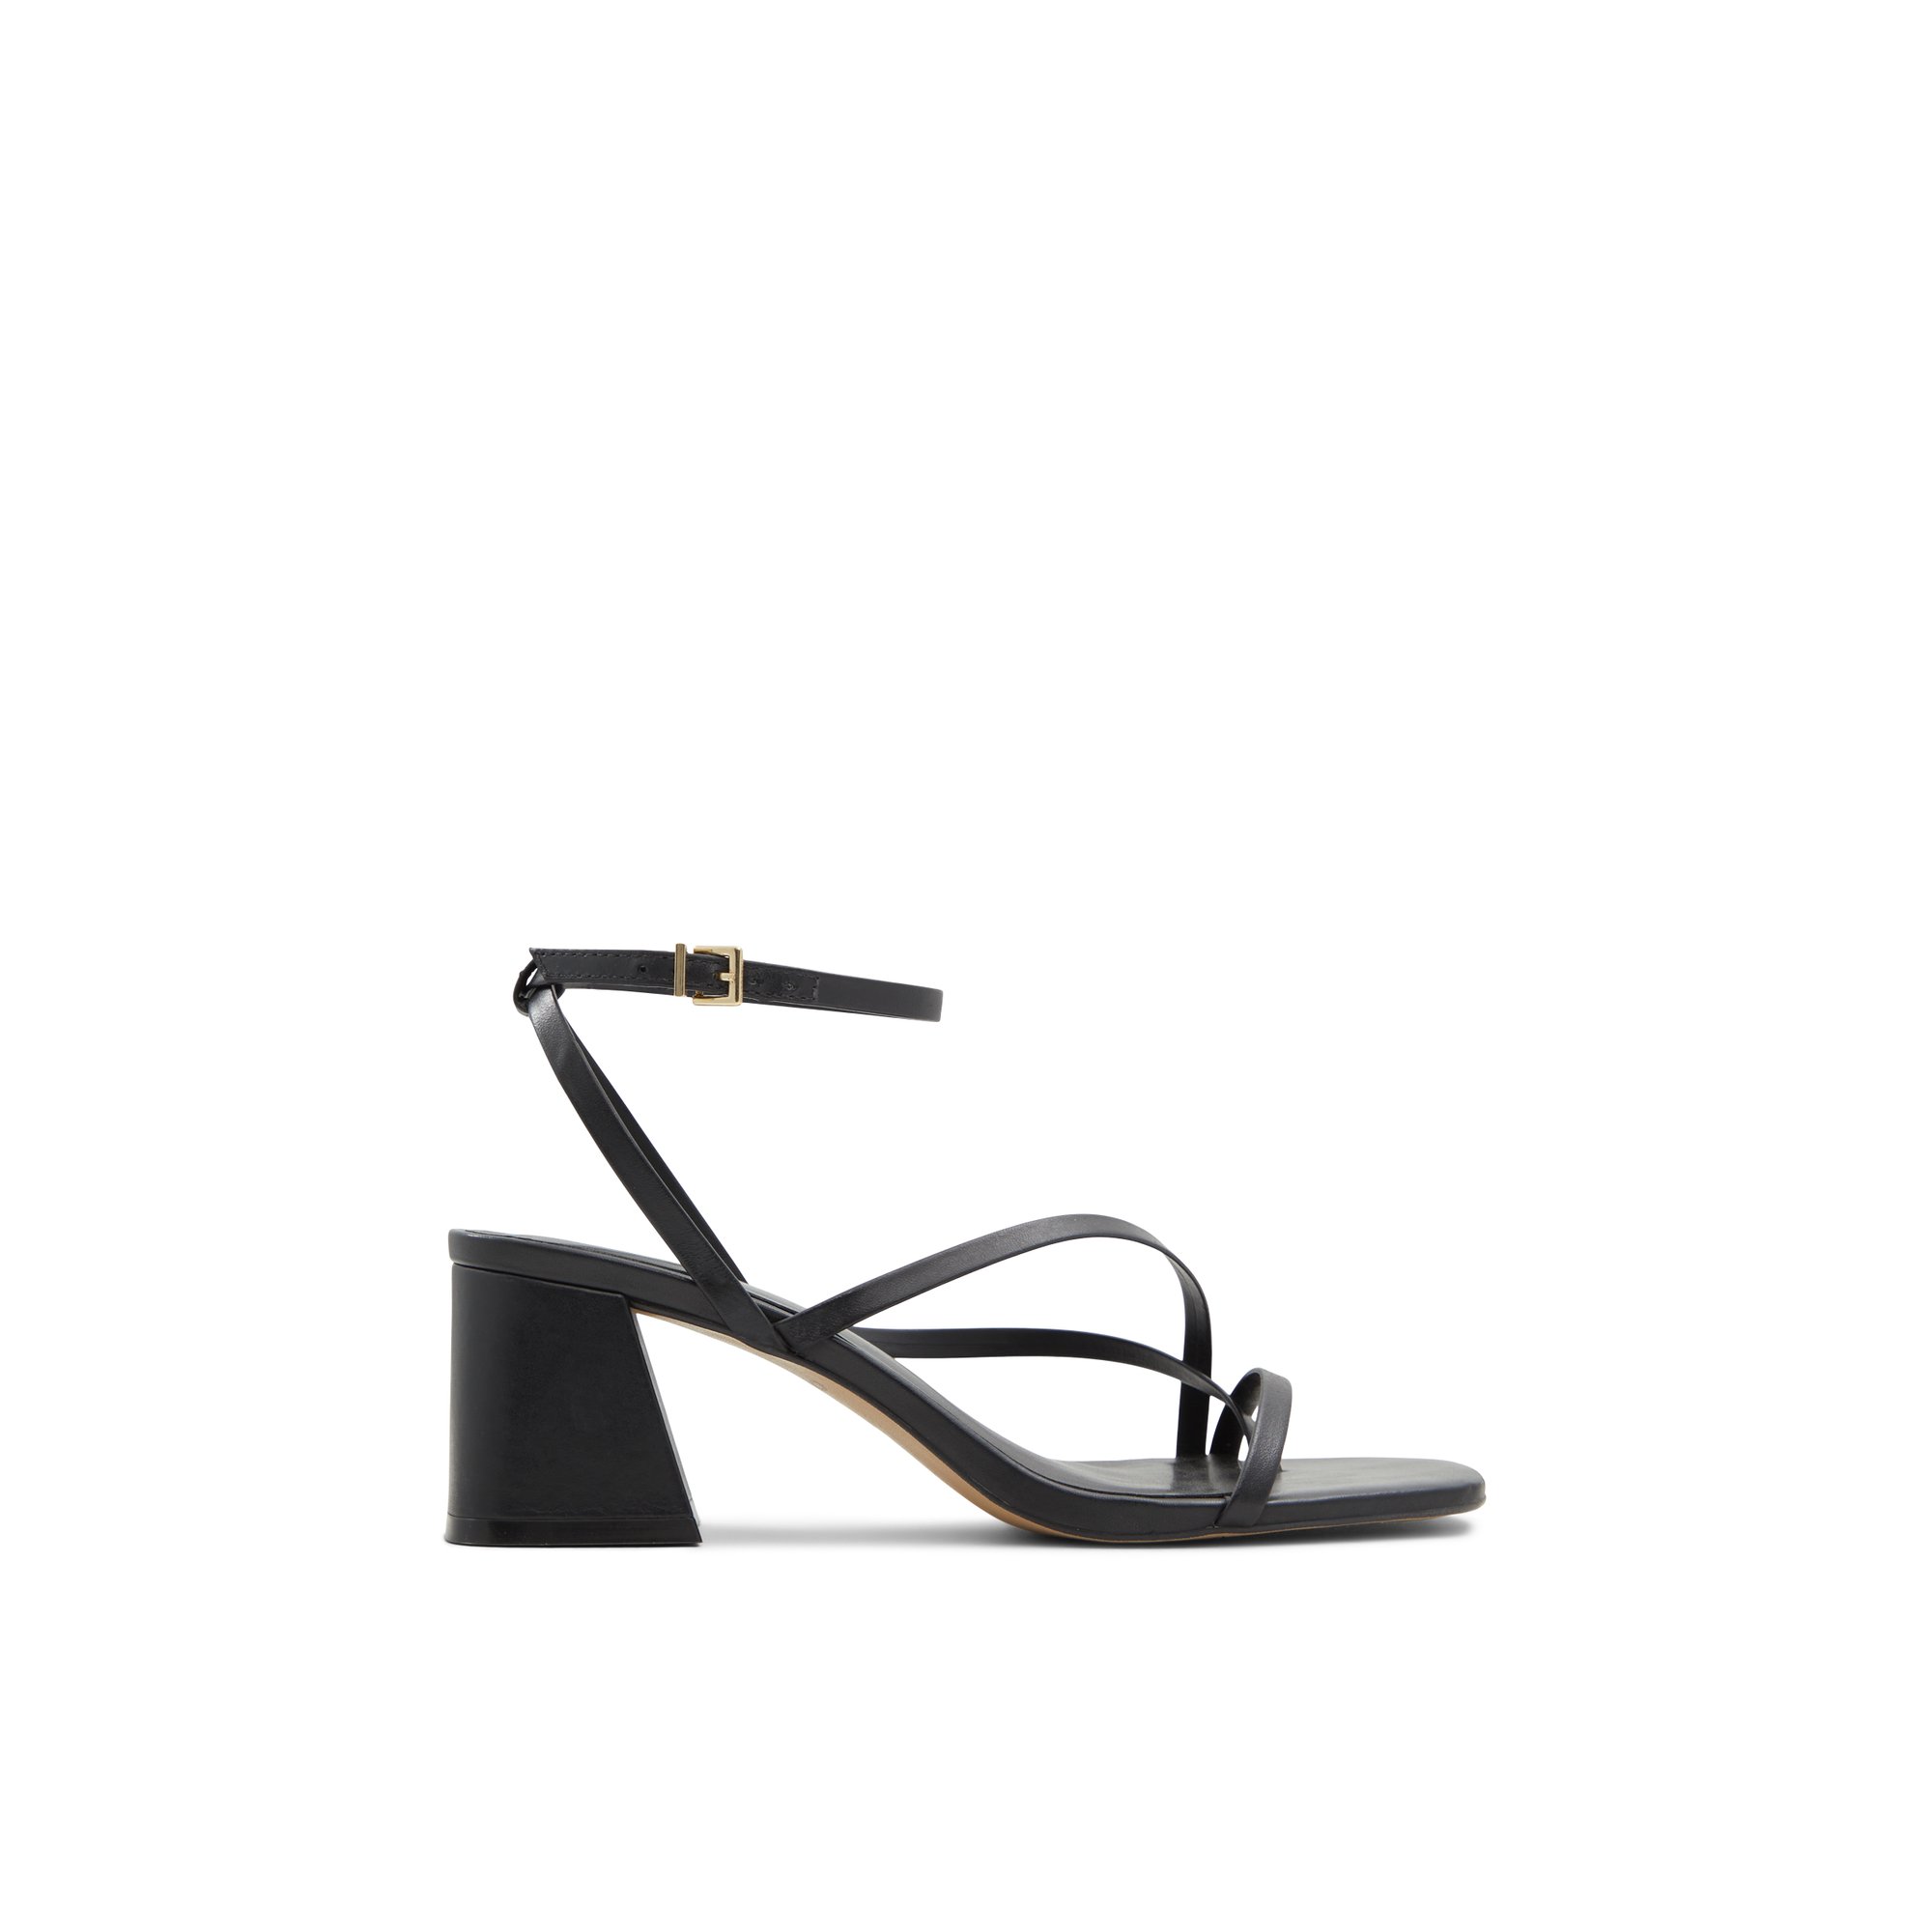 ALDO Adrauder - Women's Strappy Sandal Sandals - Black